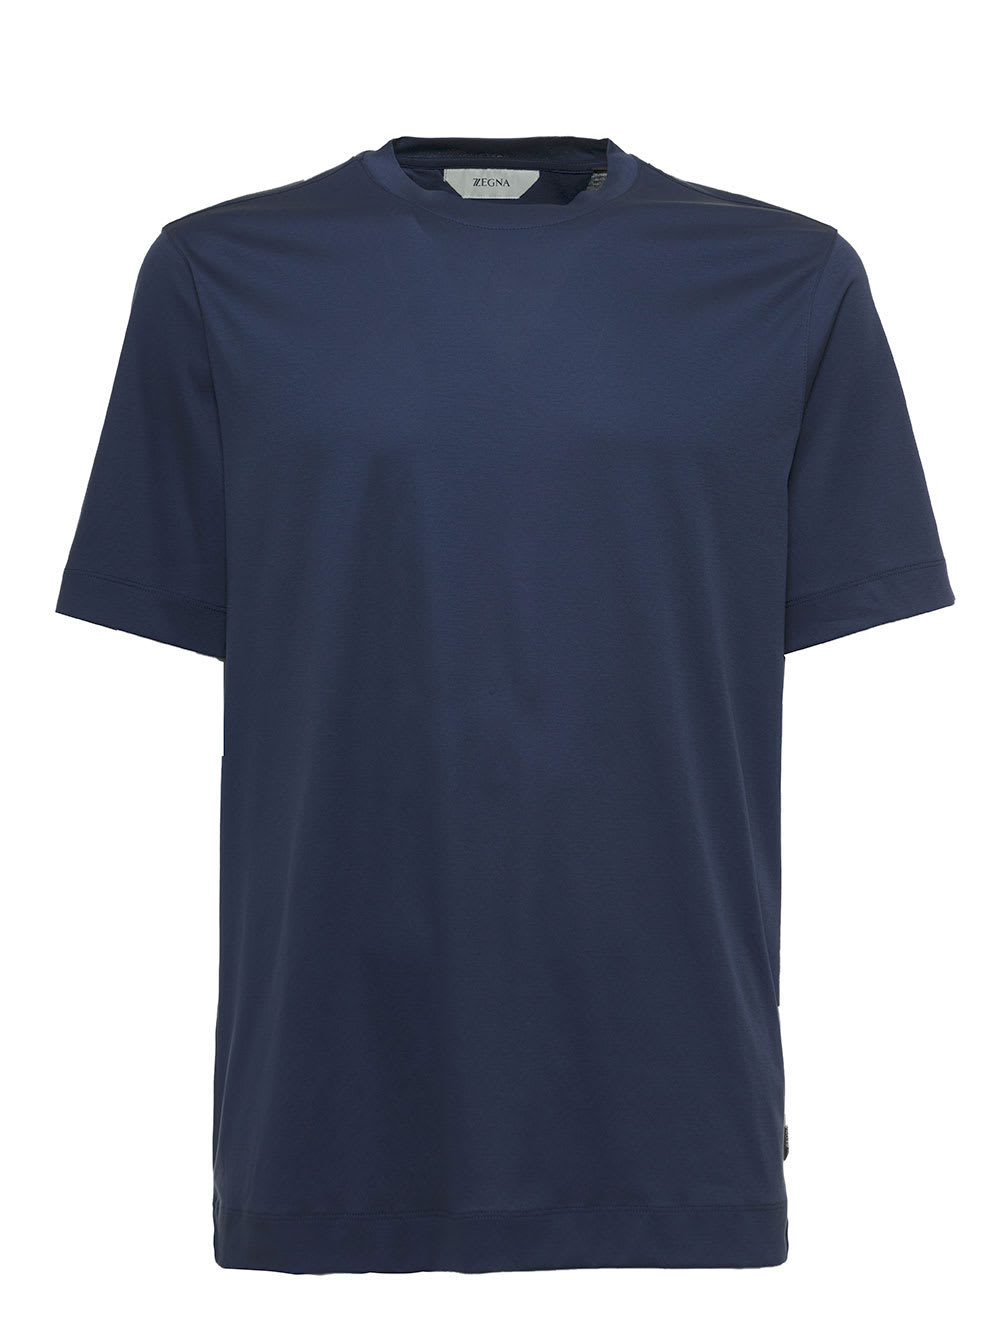 Ermenegildo Zegna Blue Cotton Crew Neck T-shirt